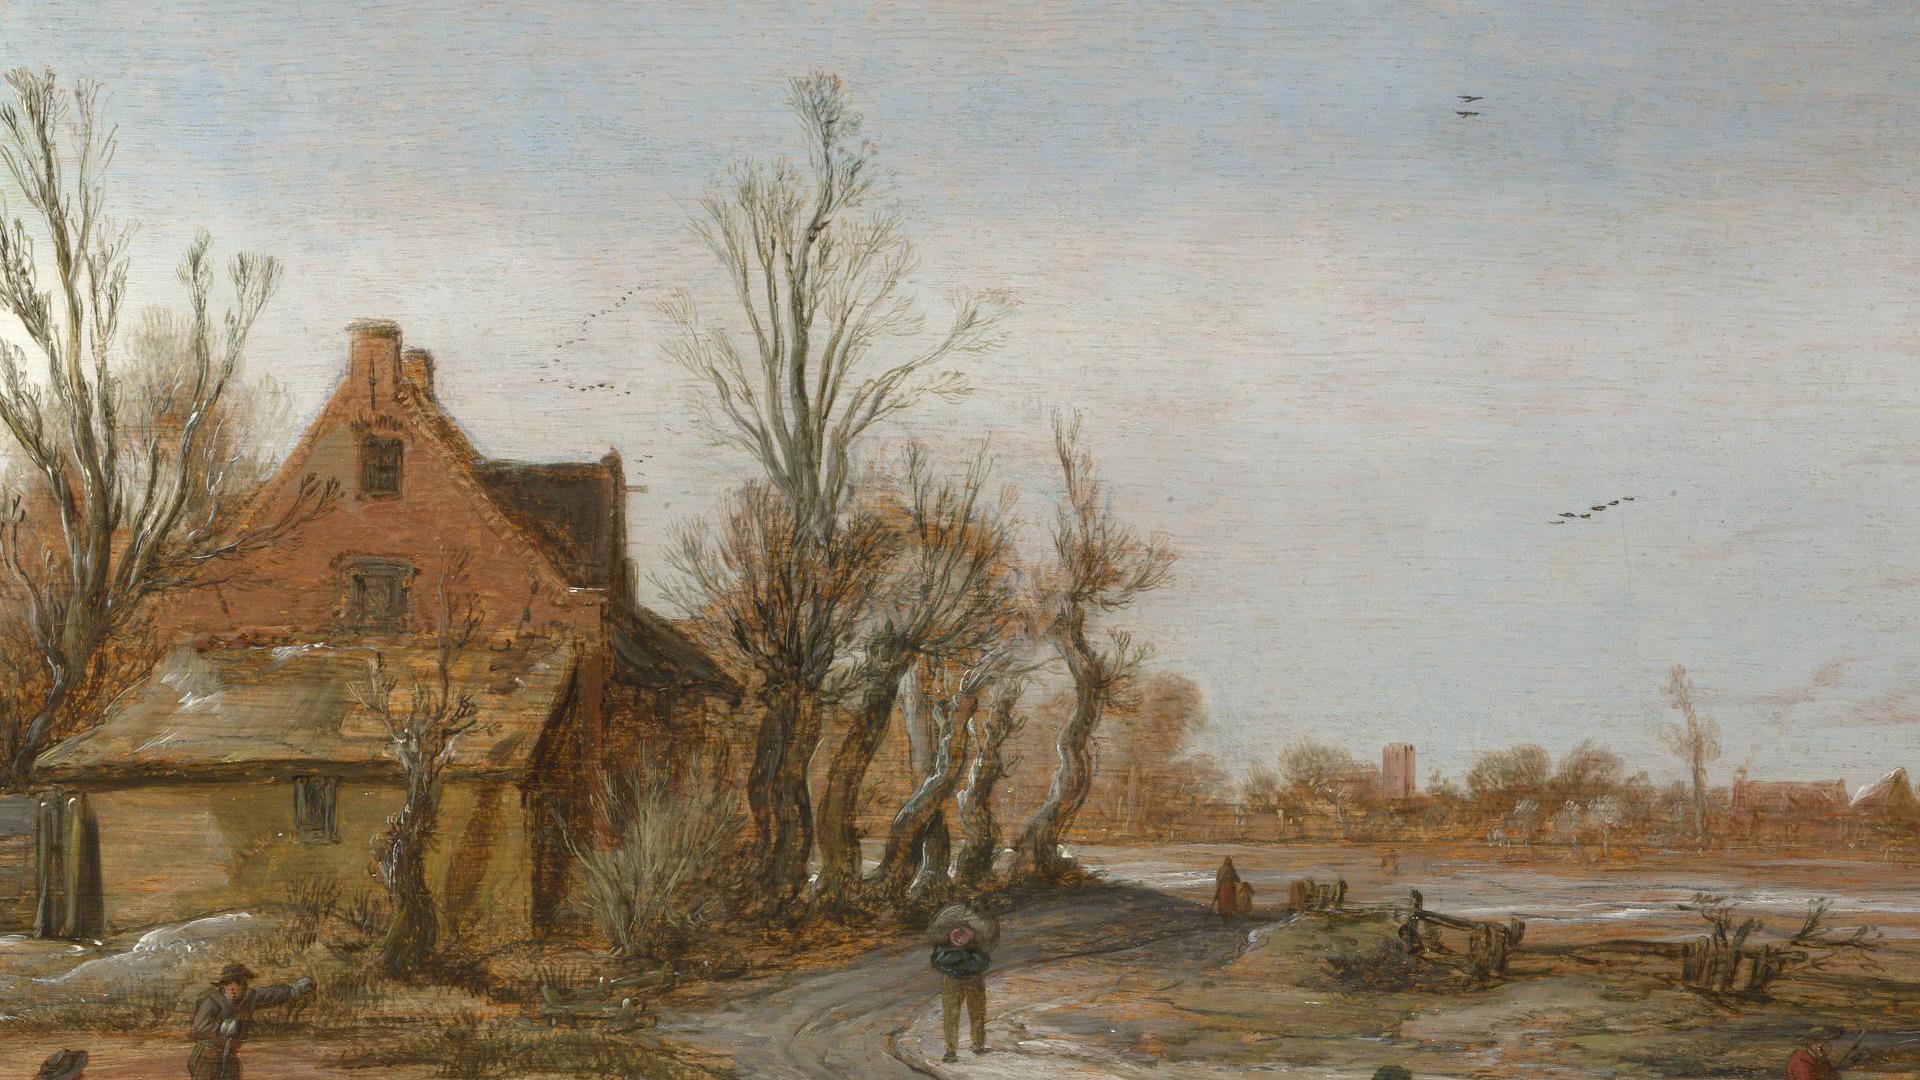 A Winter Landscape by Esaias van de Velde